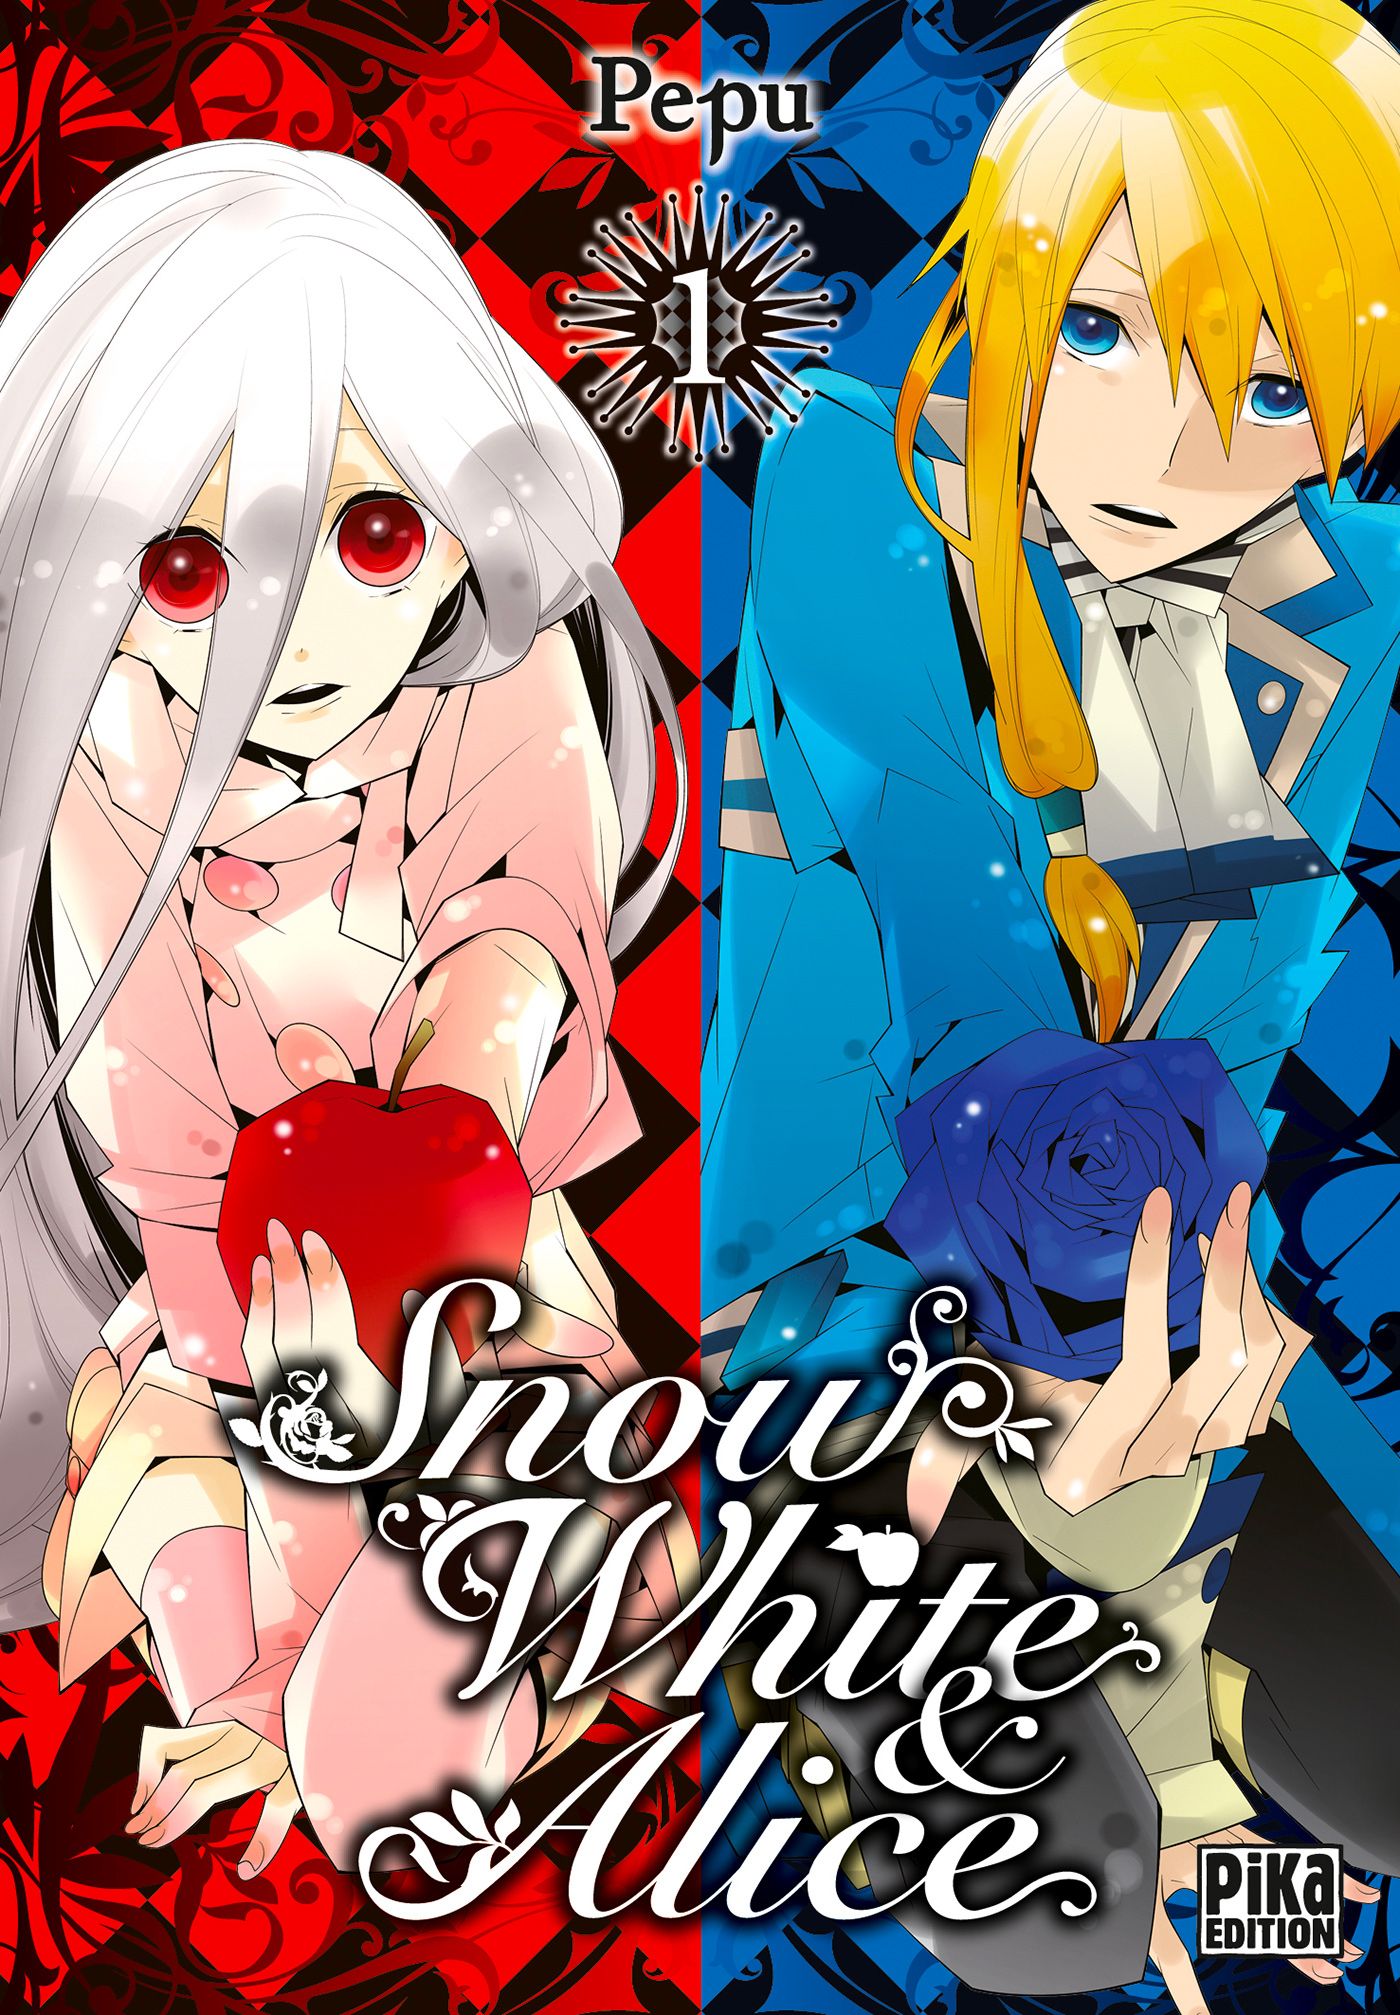 Tag cooking sur Manga-Fan Snow-white-alice-1-pika